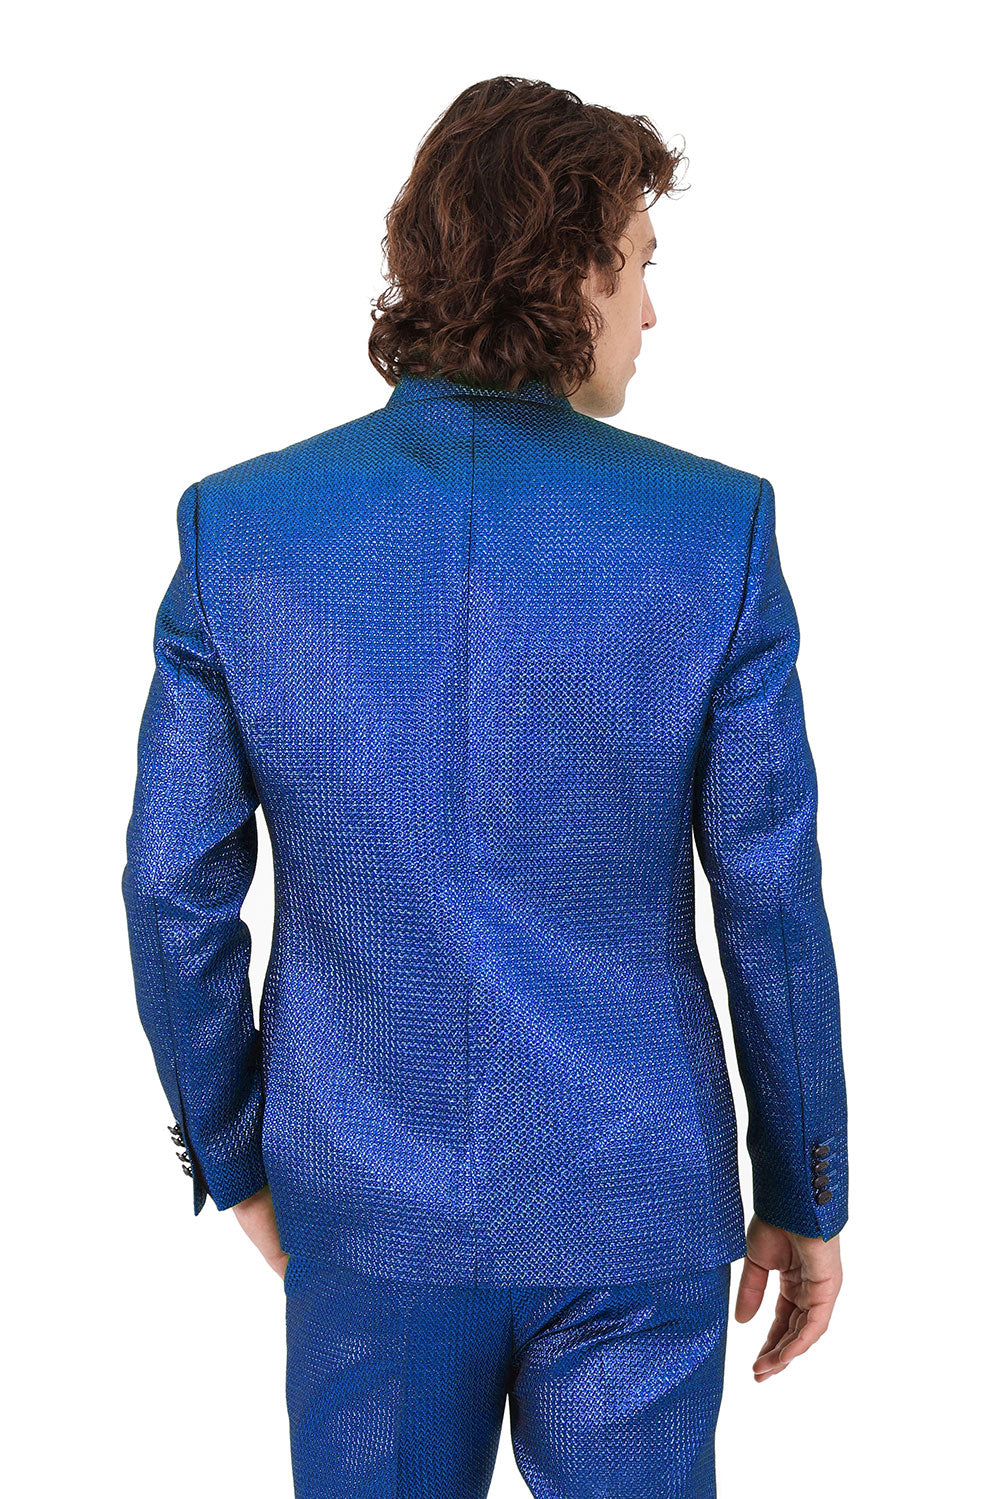 Barabas Men's Stand Collar Shiny Textured Material Blazer 2BL3105 Blue